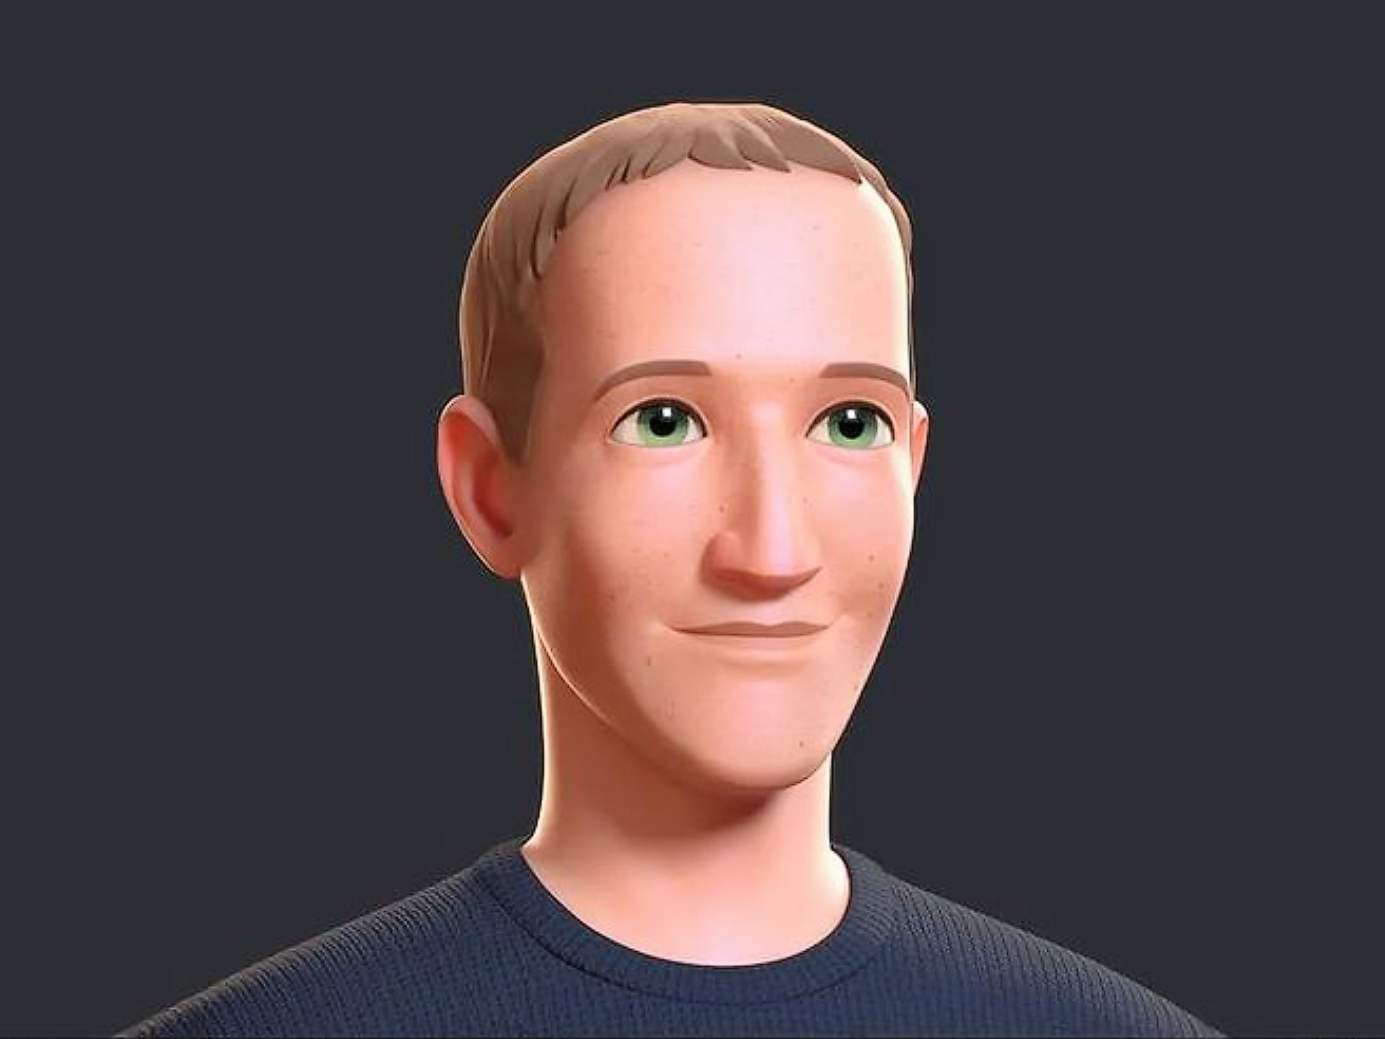 <p>Mark Zuckerberg unveiled his latest avatar for Meta’s Horizon metaverse platform on 19 August, 2022</p>